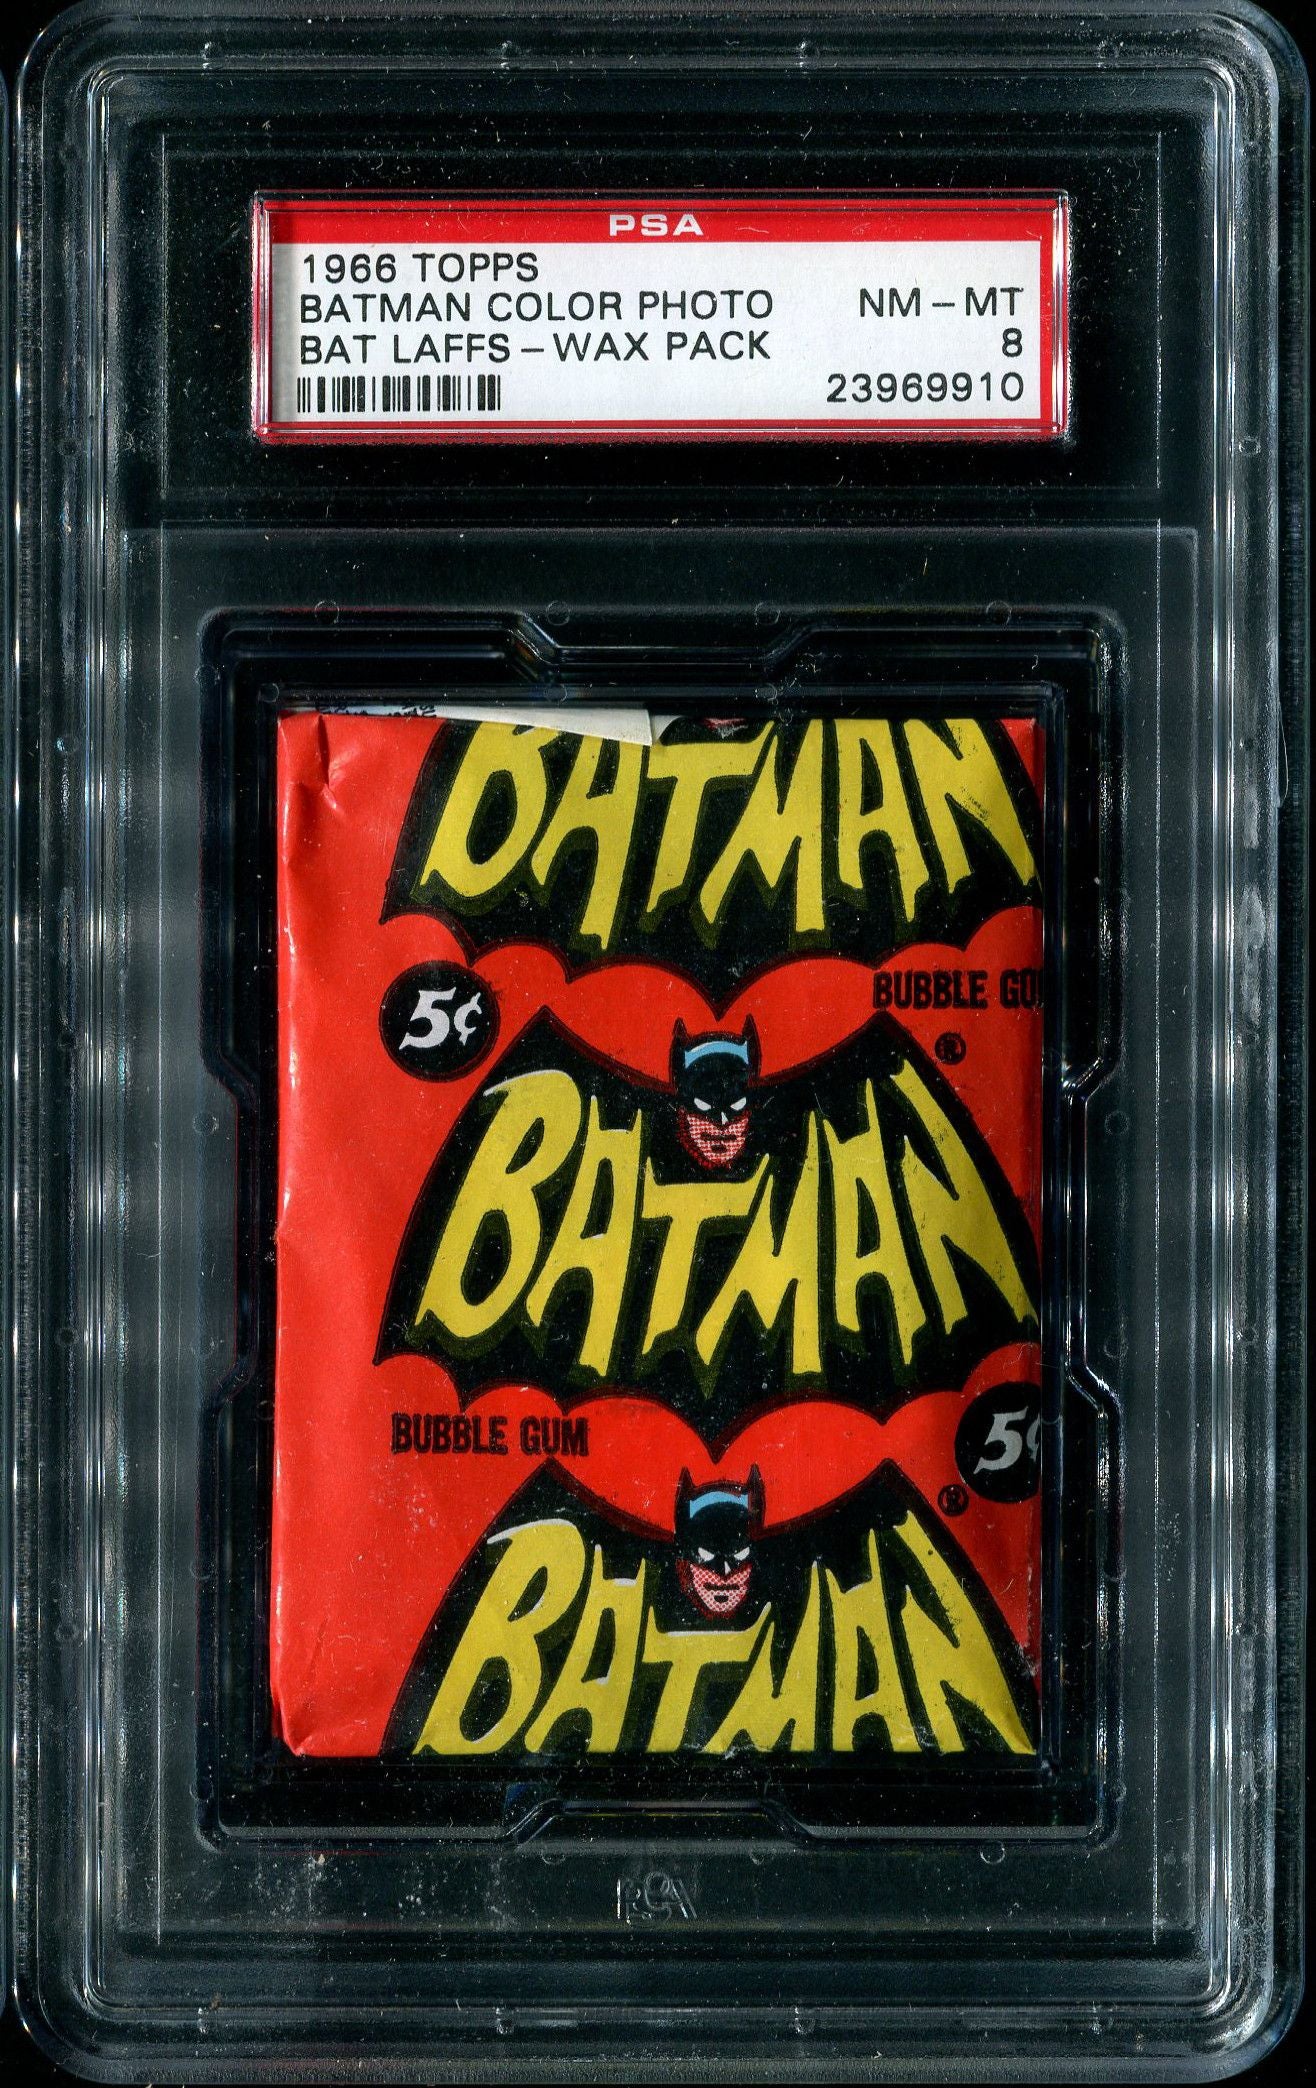 1966 Topps Batman Bat Laffs Unopened Wax Pack PSA NM-MT 8